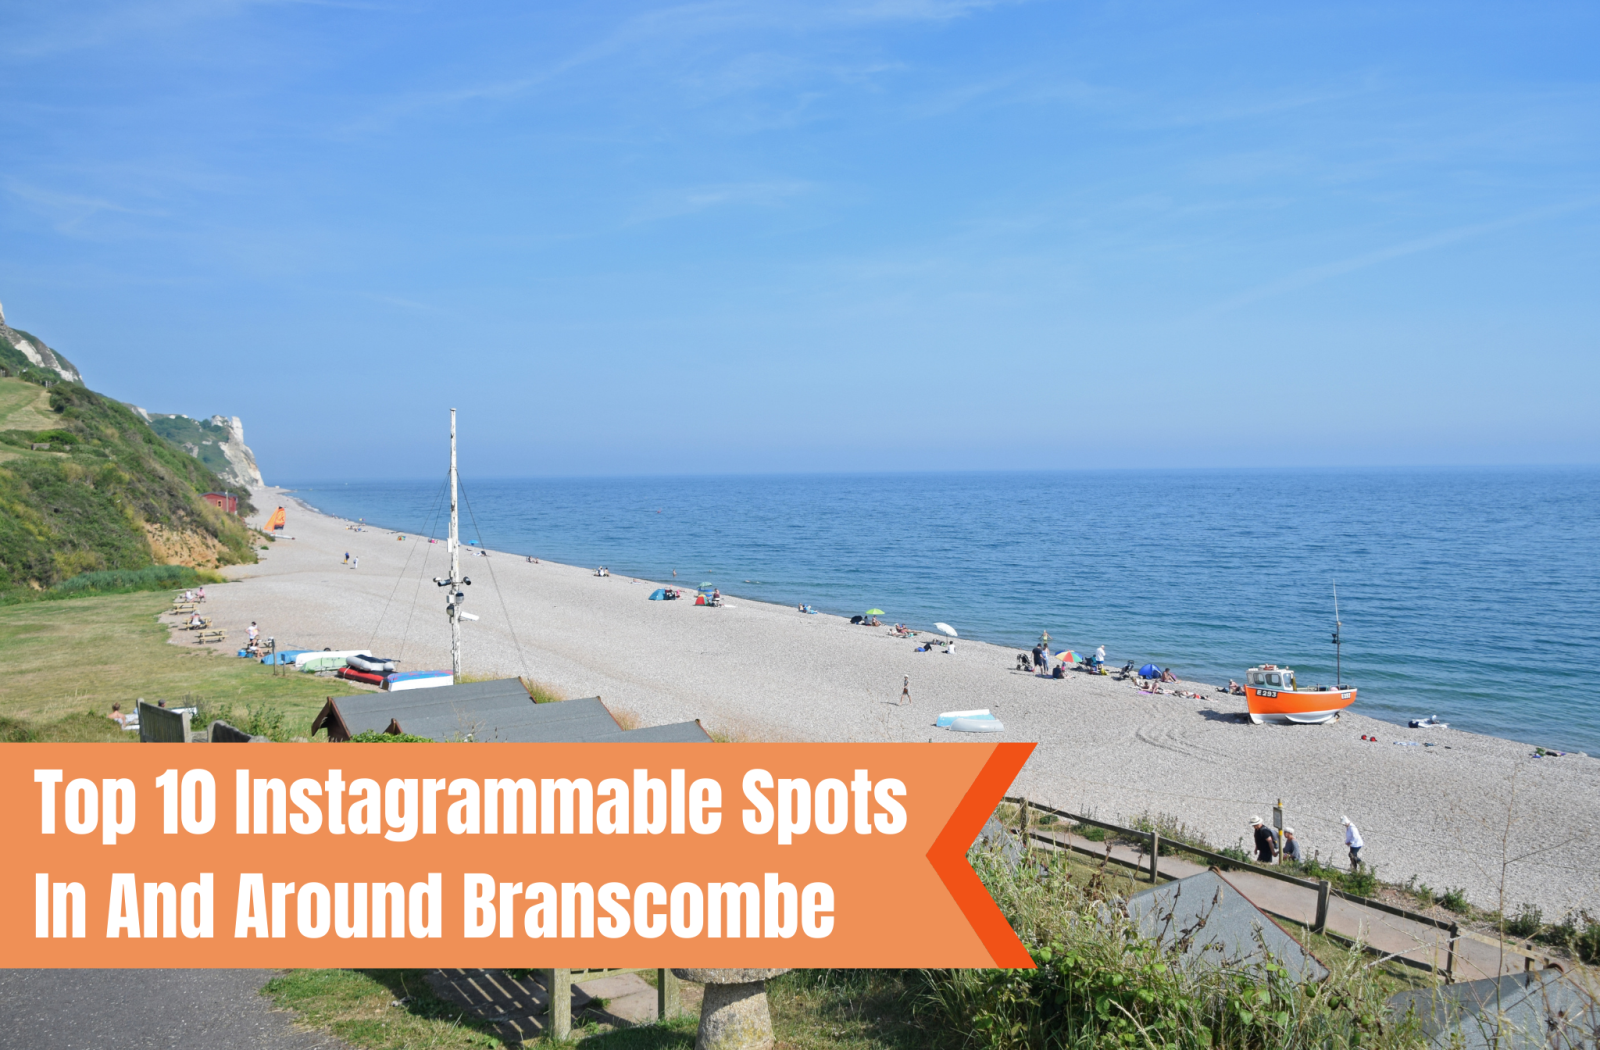 Instagrammable spots in Branscombe